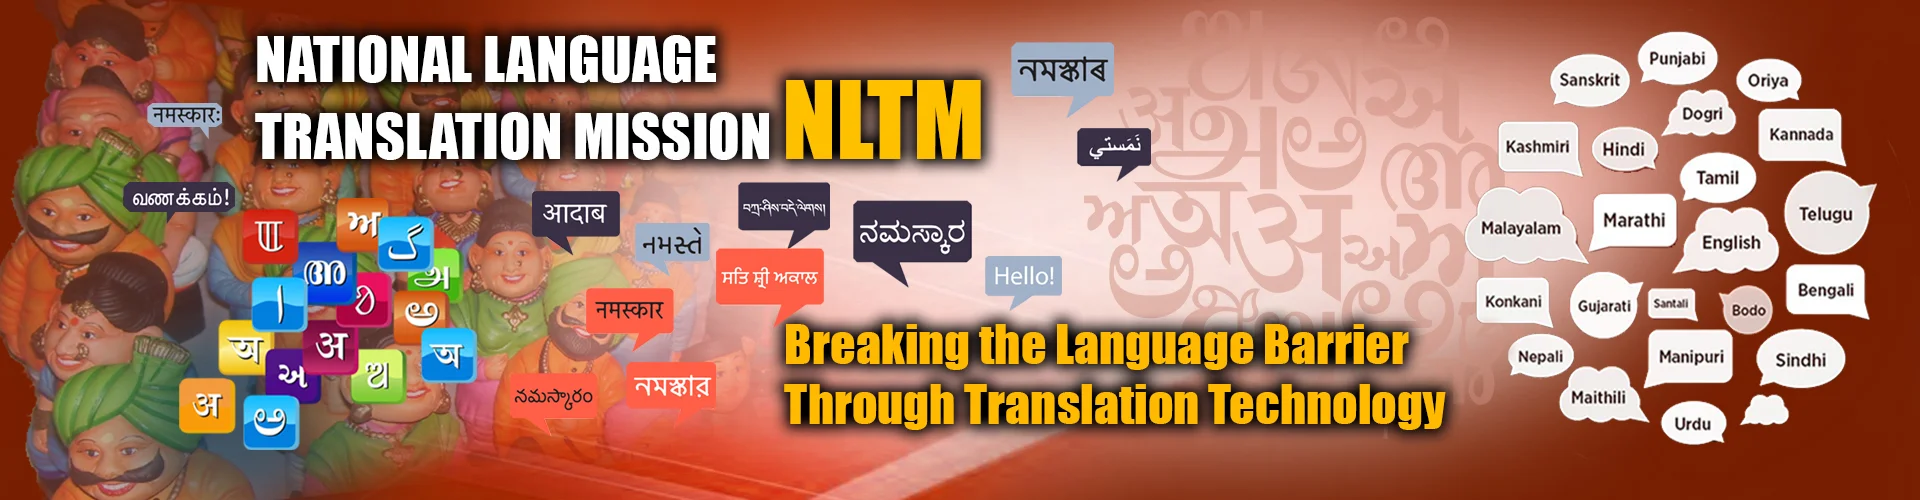 National Language Translation Mission